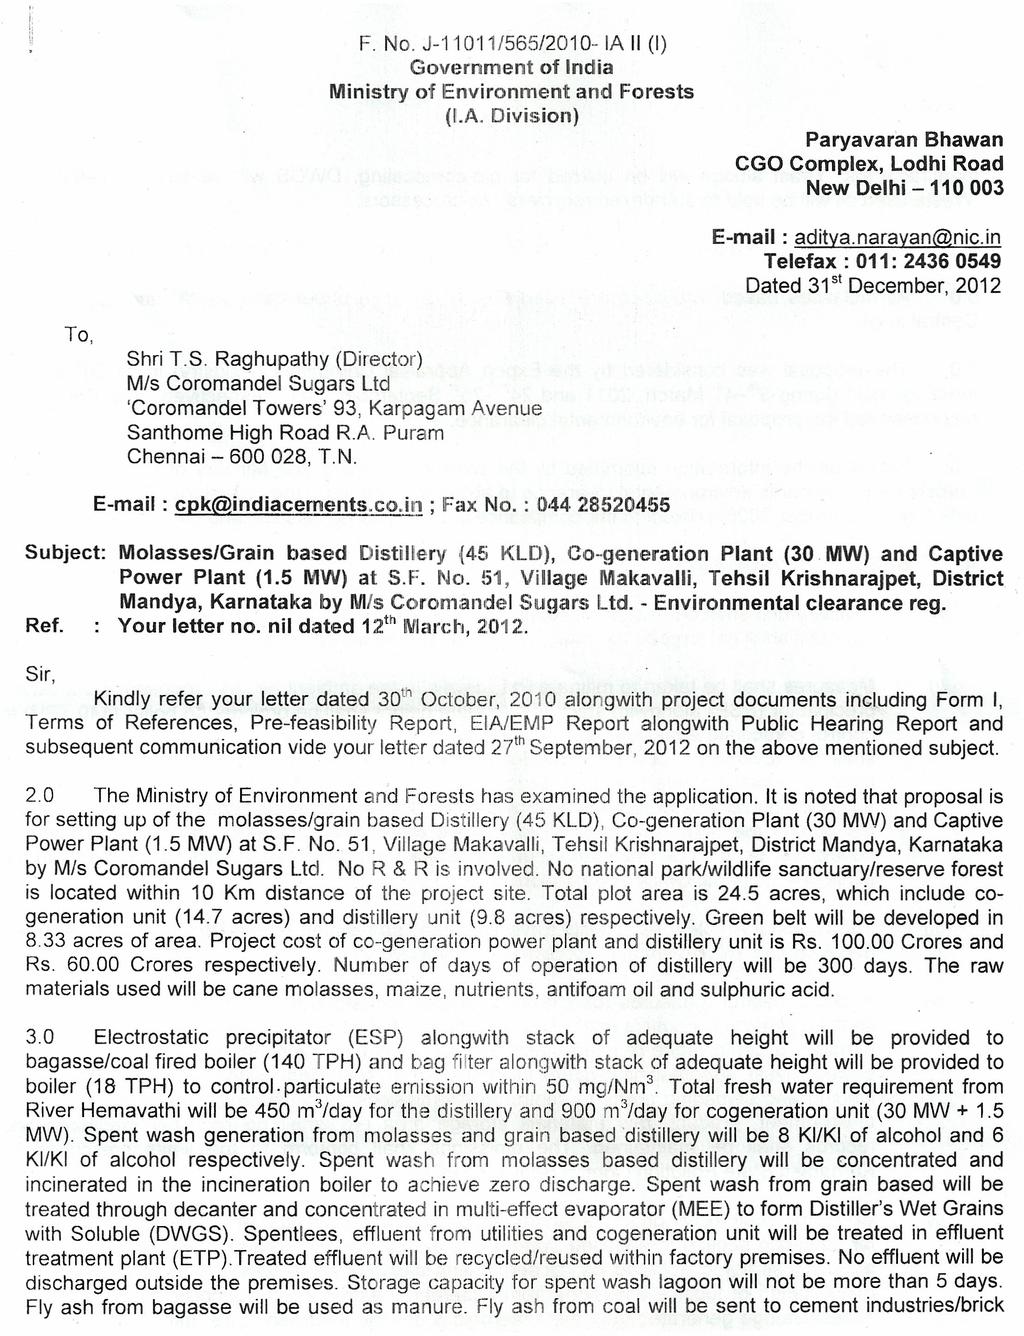 F. No. J-'11011/565/2010-IA II (I) Government of India Ministry of Environment and Forests (I.A. Division) Paryavaran Bhawan CGO Complex, Lodhi Road New Delhi - 110 003 E-mail: aditya.narayan@nic.